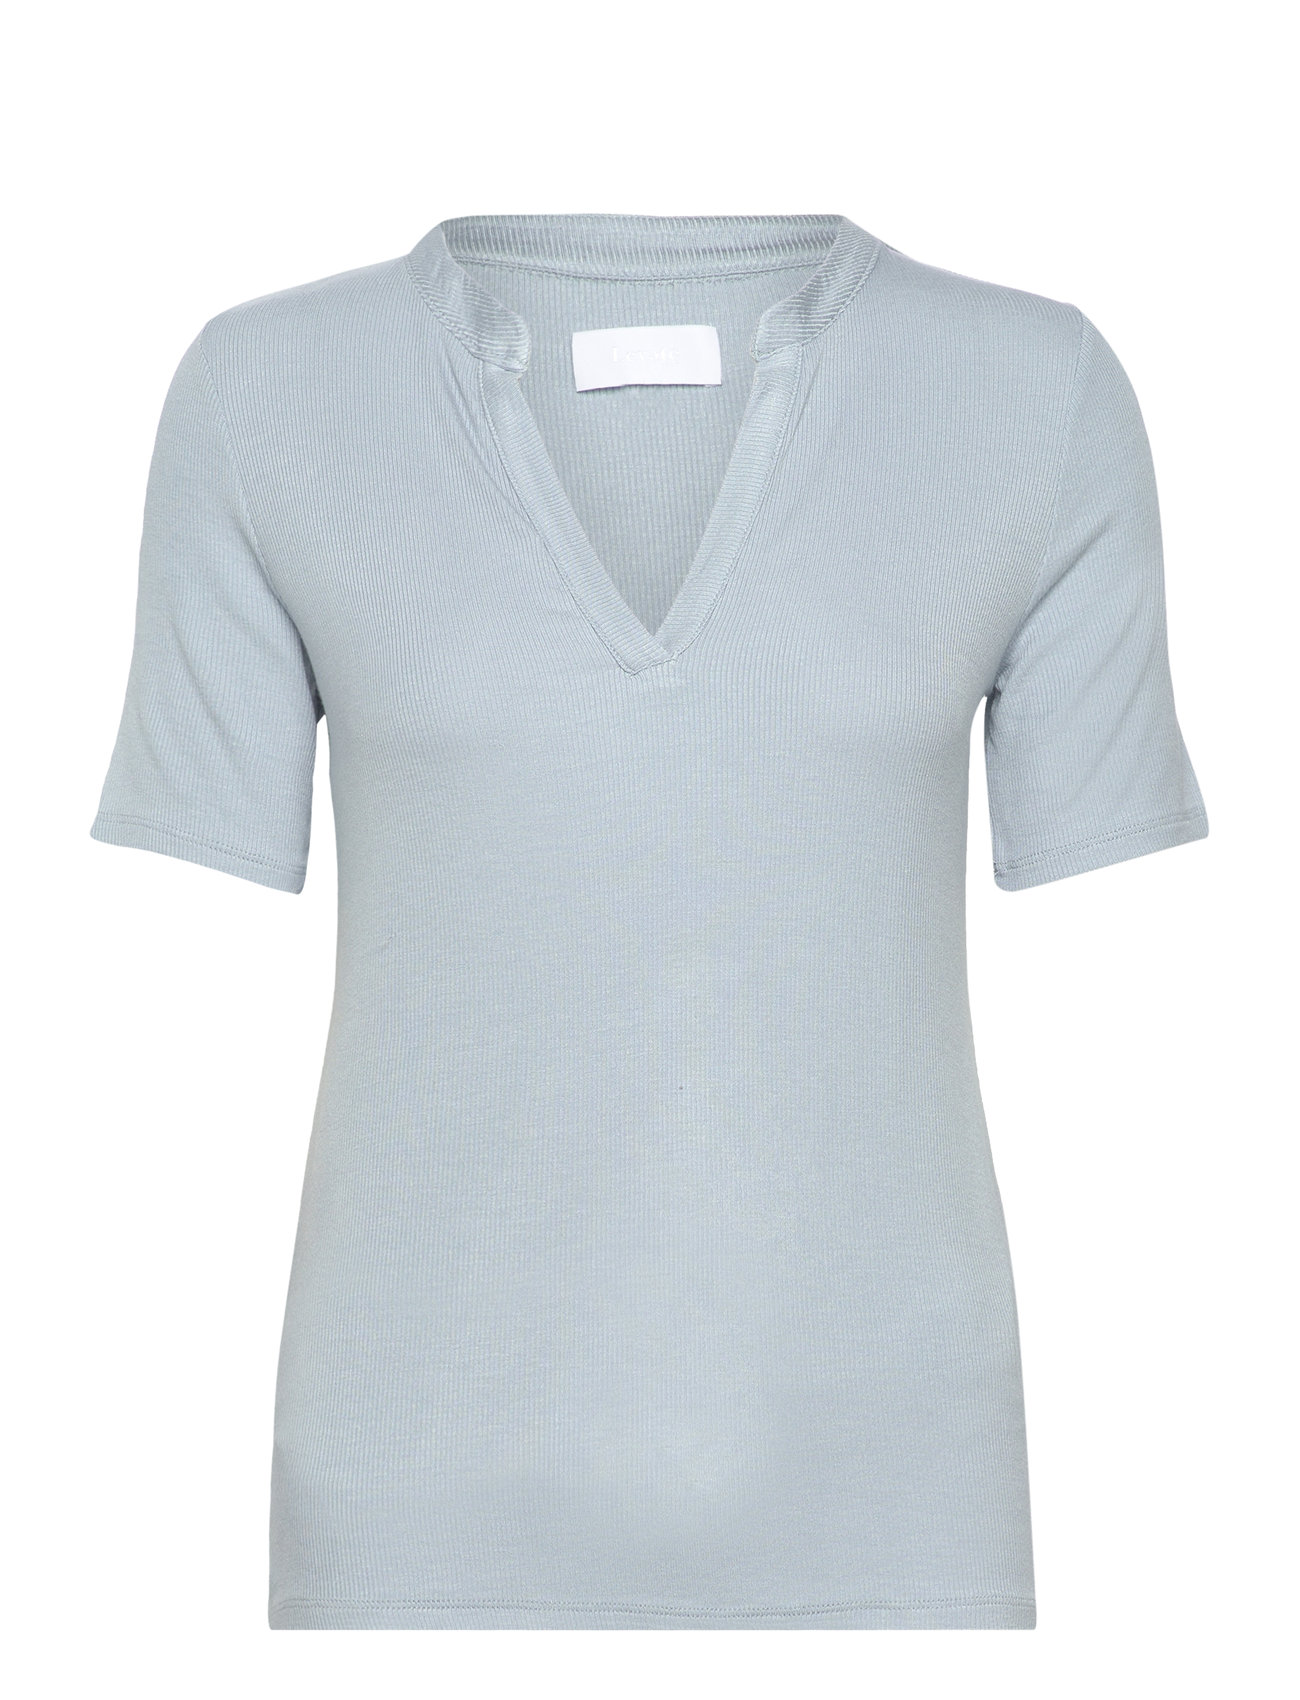 Lr-Ika Tops T-shirts & Tops Short-sleeved Blue Levete Room